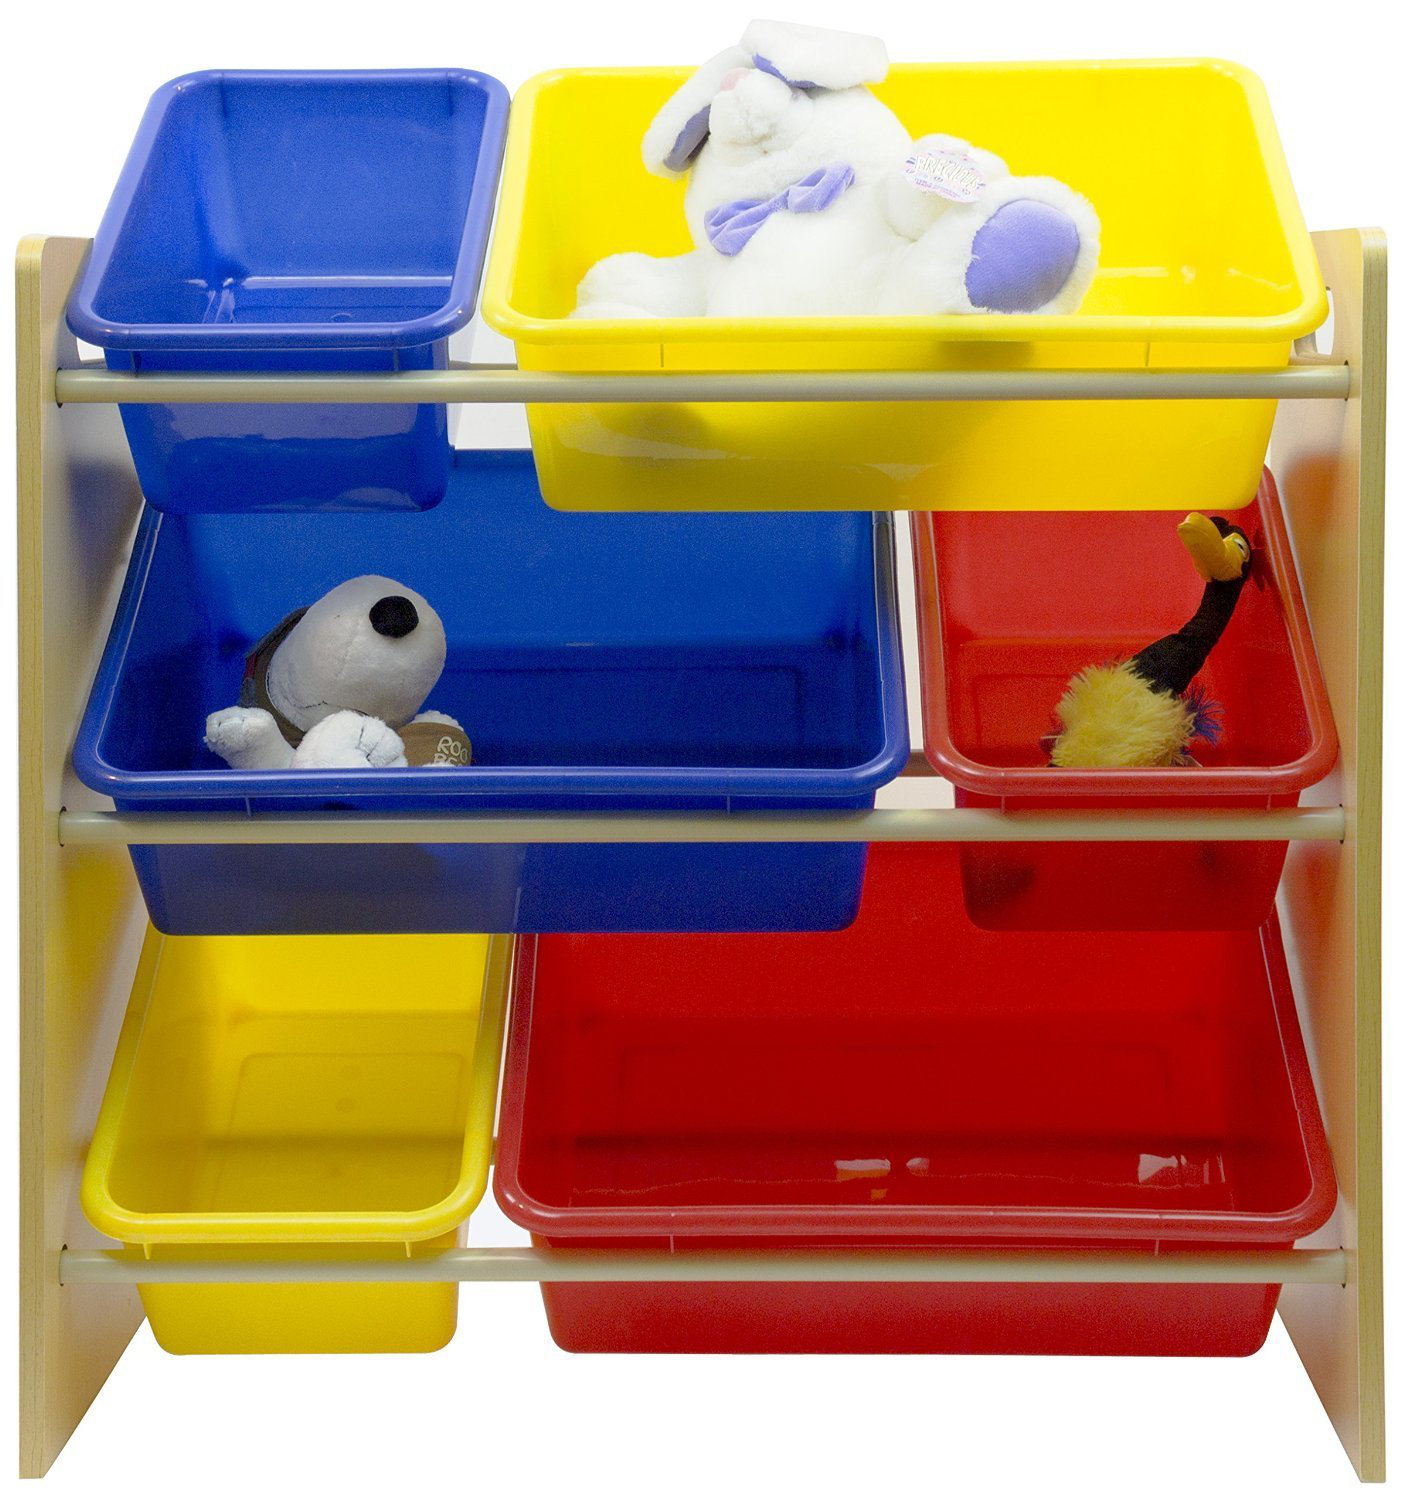 Children kids toy storage box wheeled plastic storage organizer box sorting  box multicolor,Large Organizer Storage Box Container Bin with Lid and  Wheels for Kids Toys